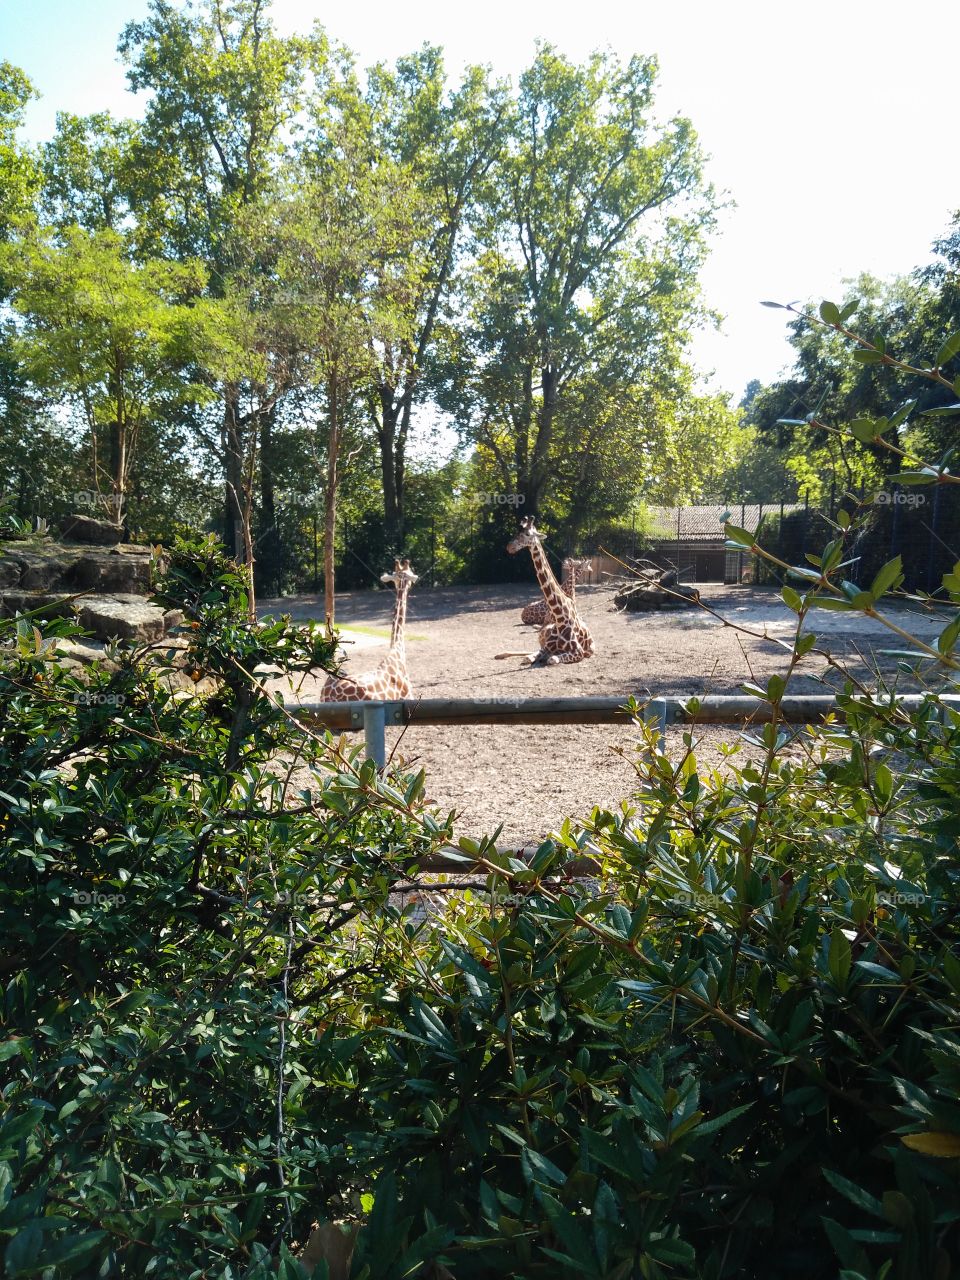 Wilhelma Zoo